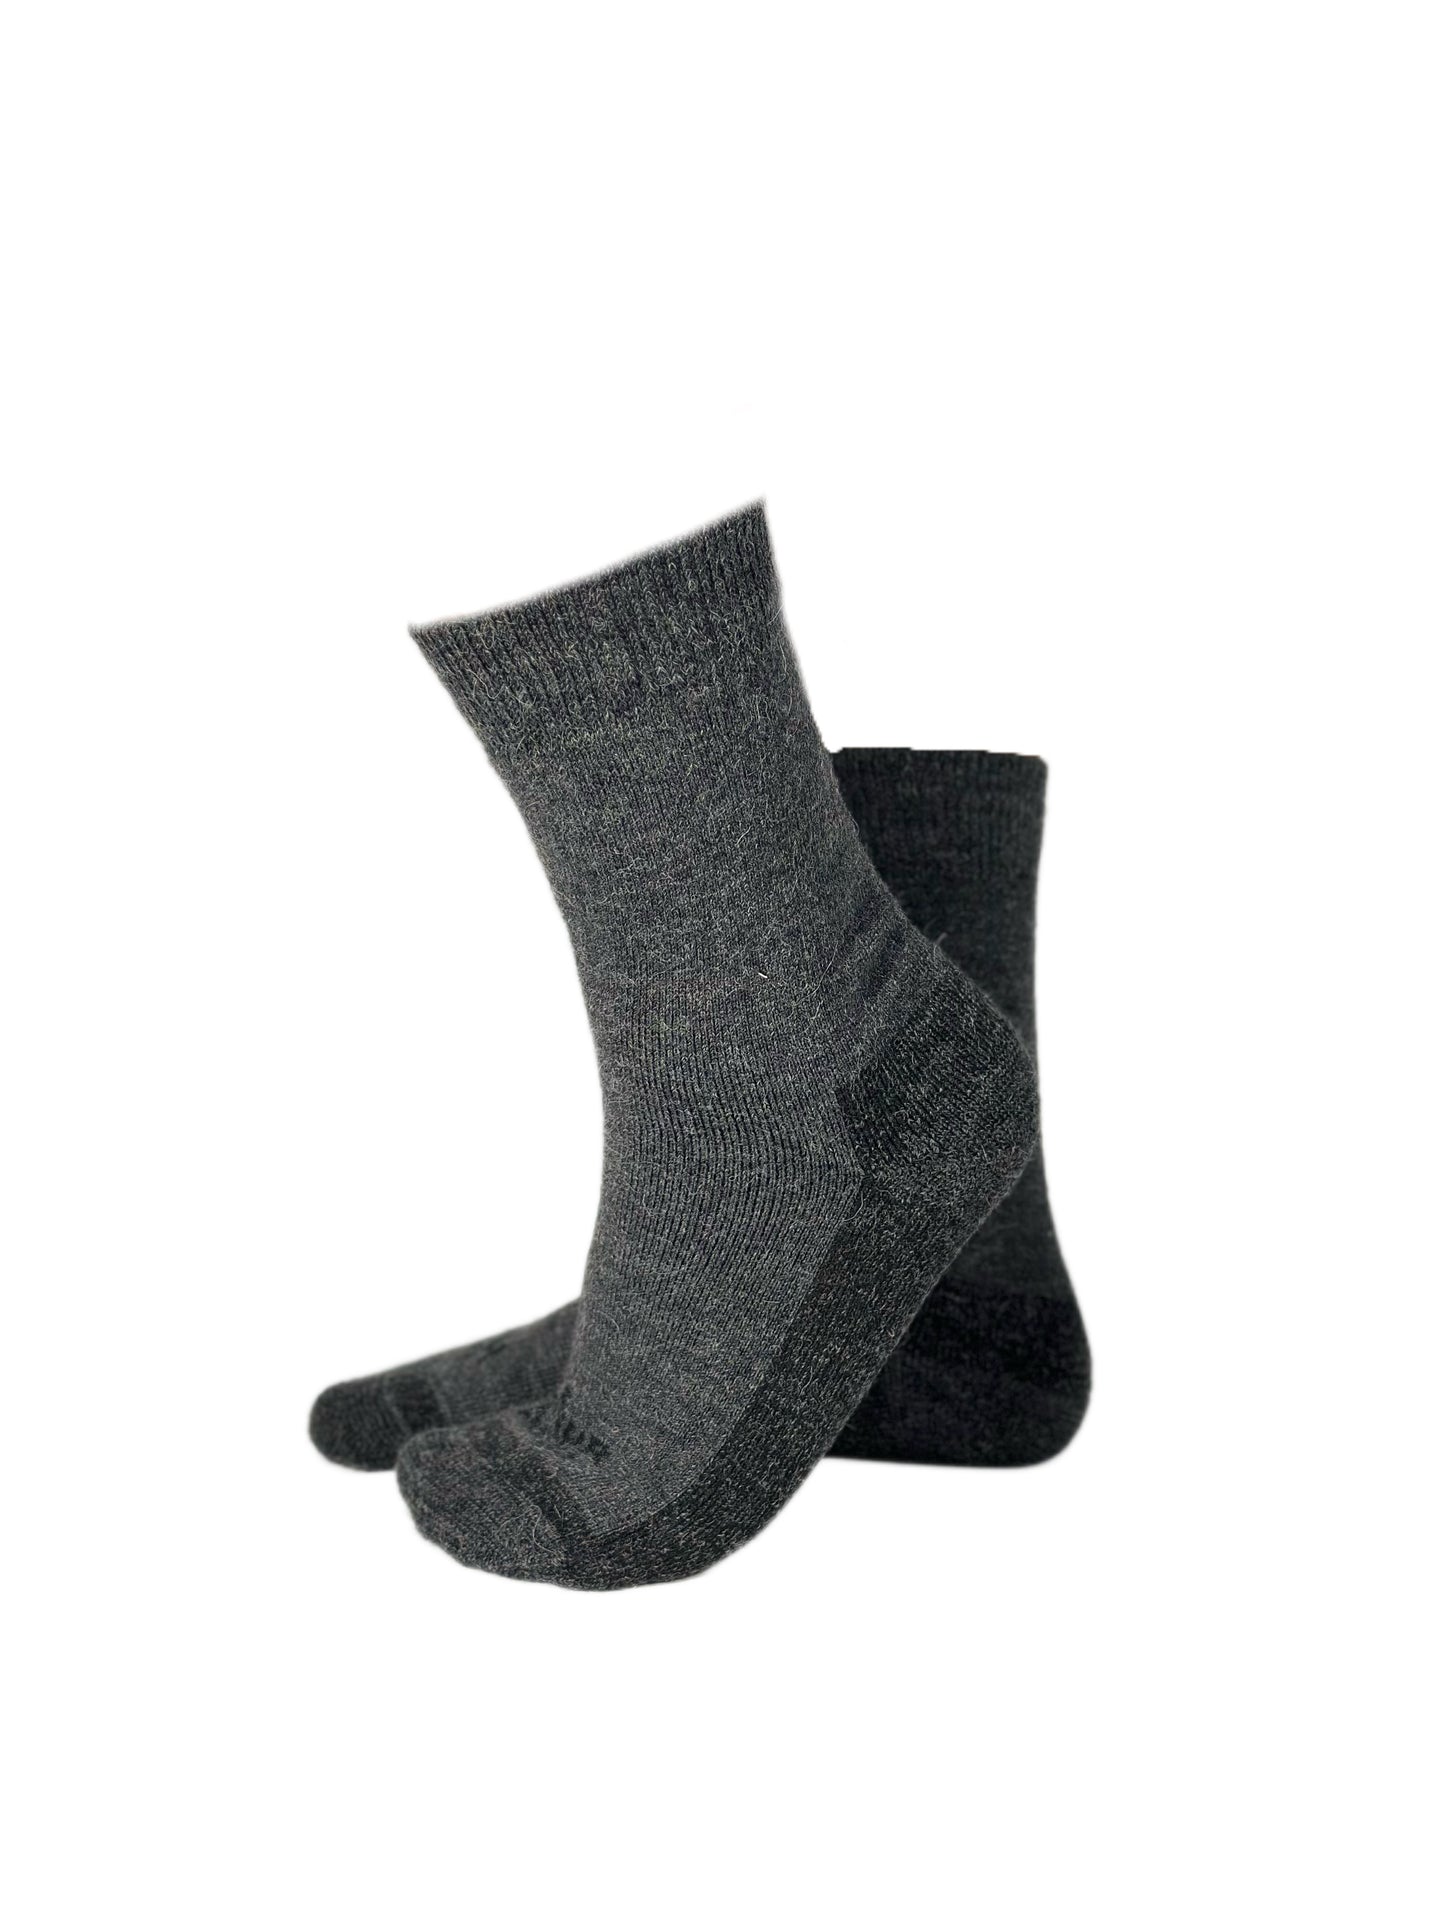 The everyday sock